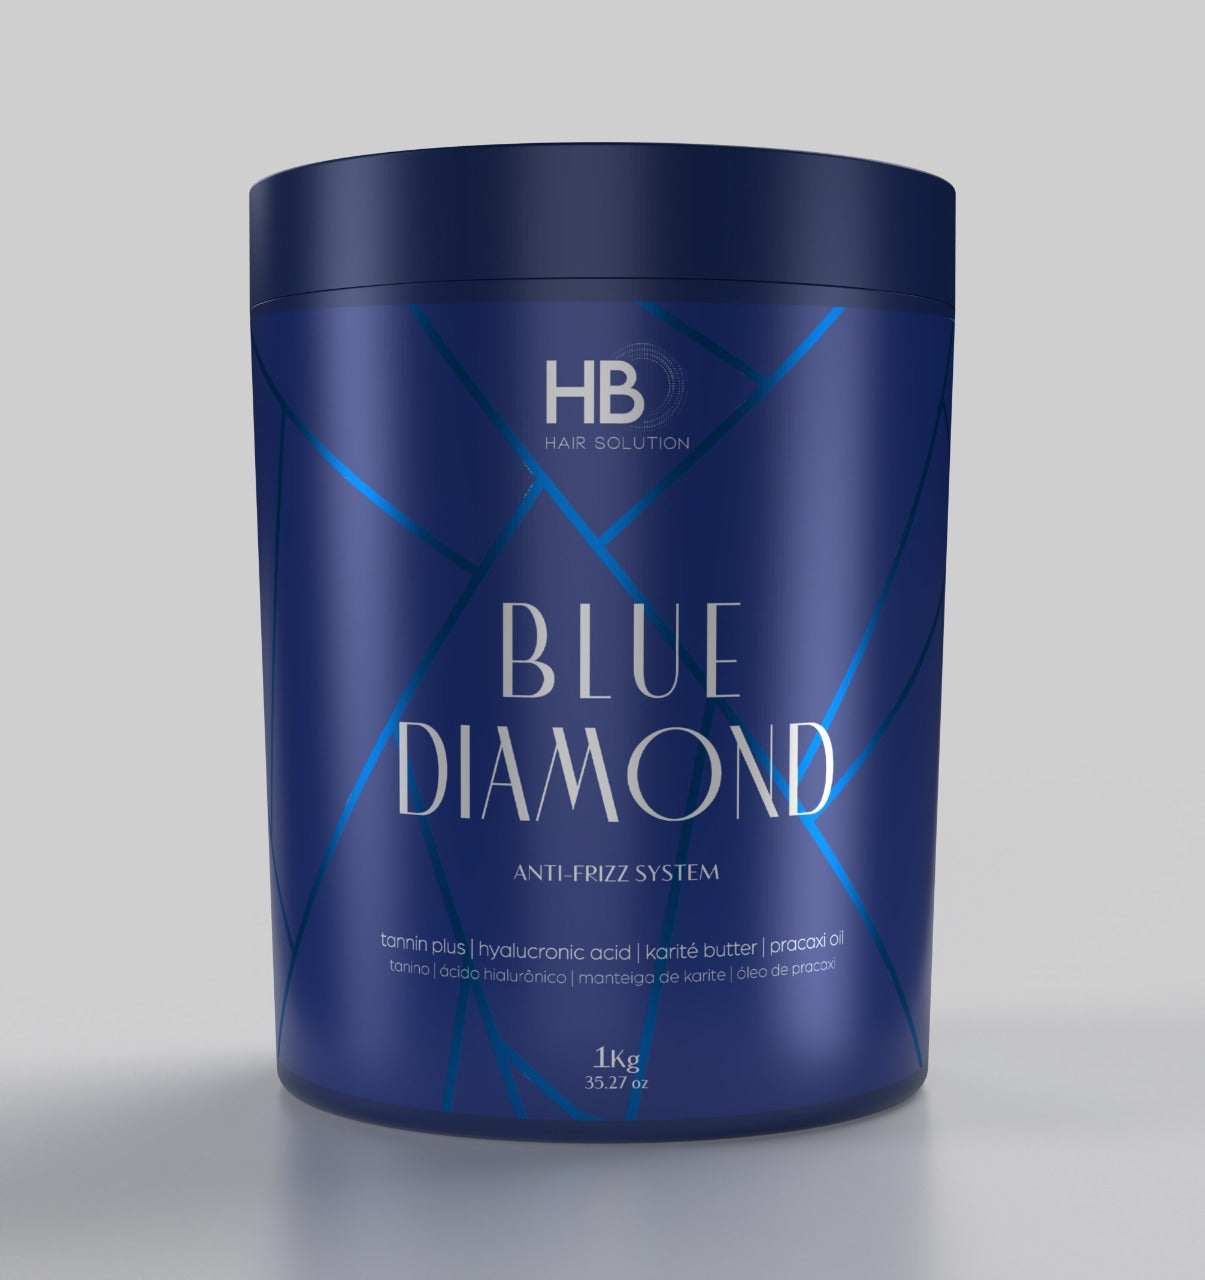 HB HAIR SOLUTION Blue Diamond Anti Frizz System 1 KG - JOLIE'S